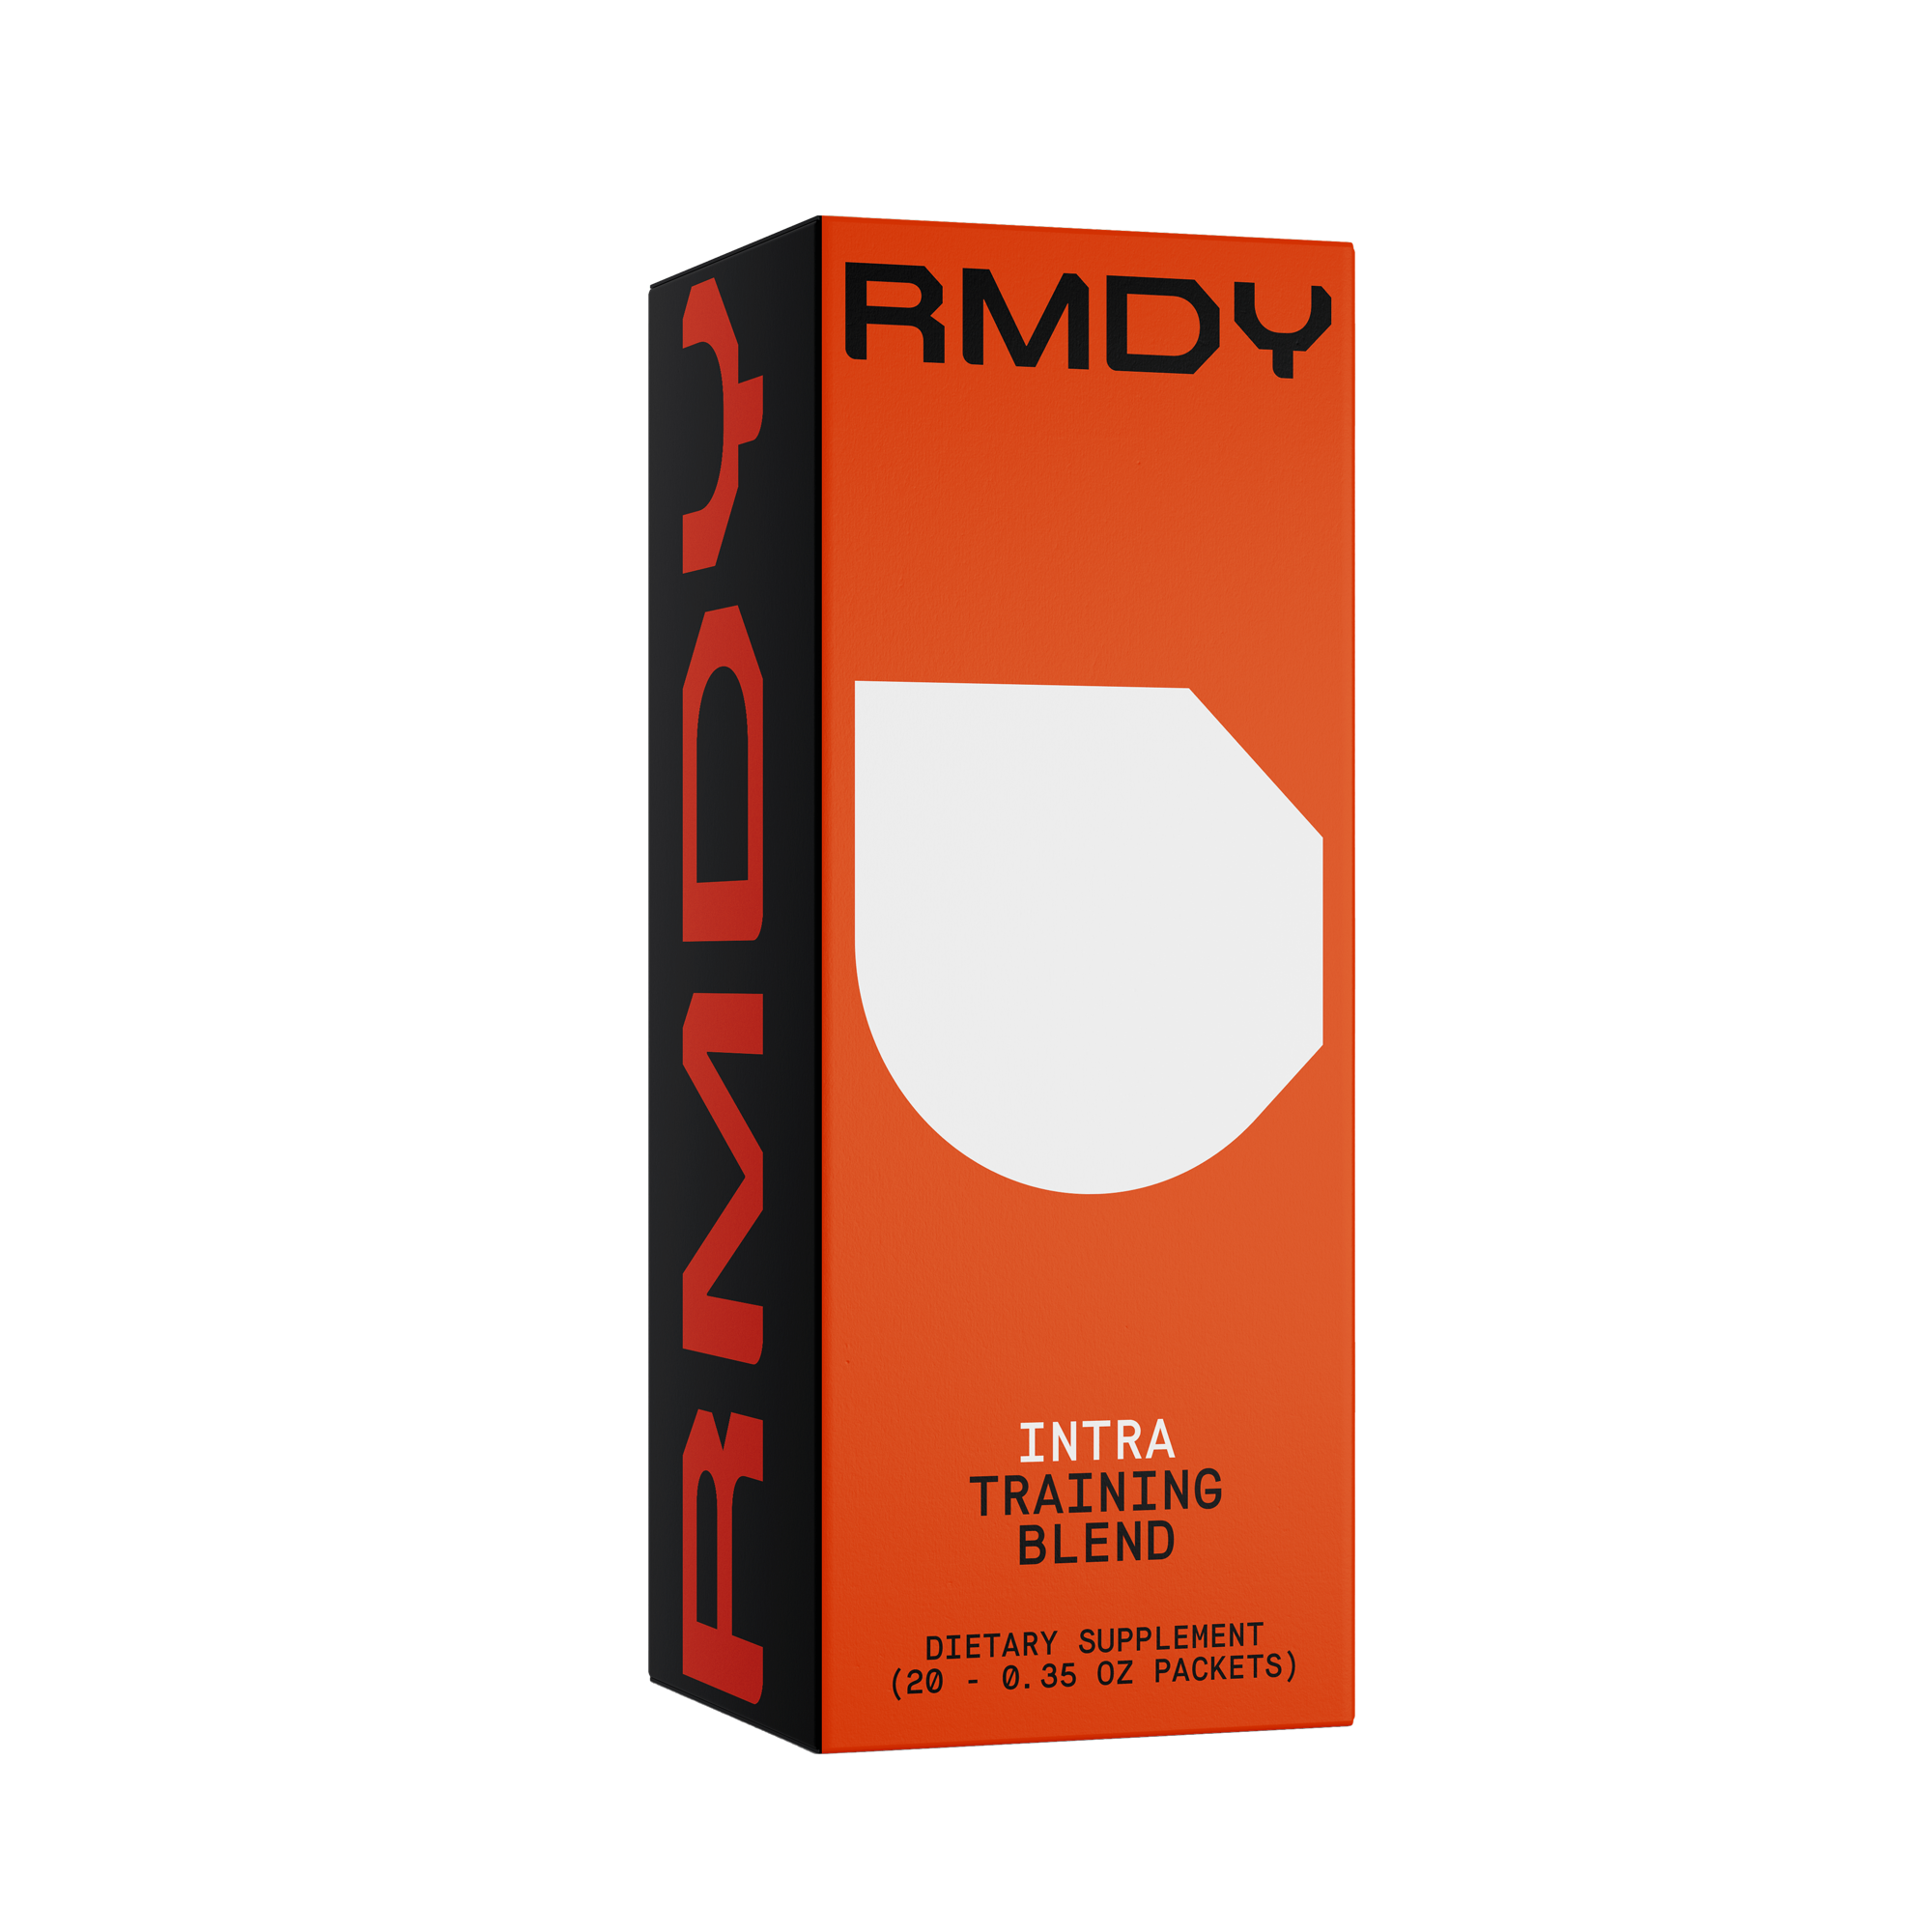 RMDY-Intra-Box-v4